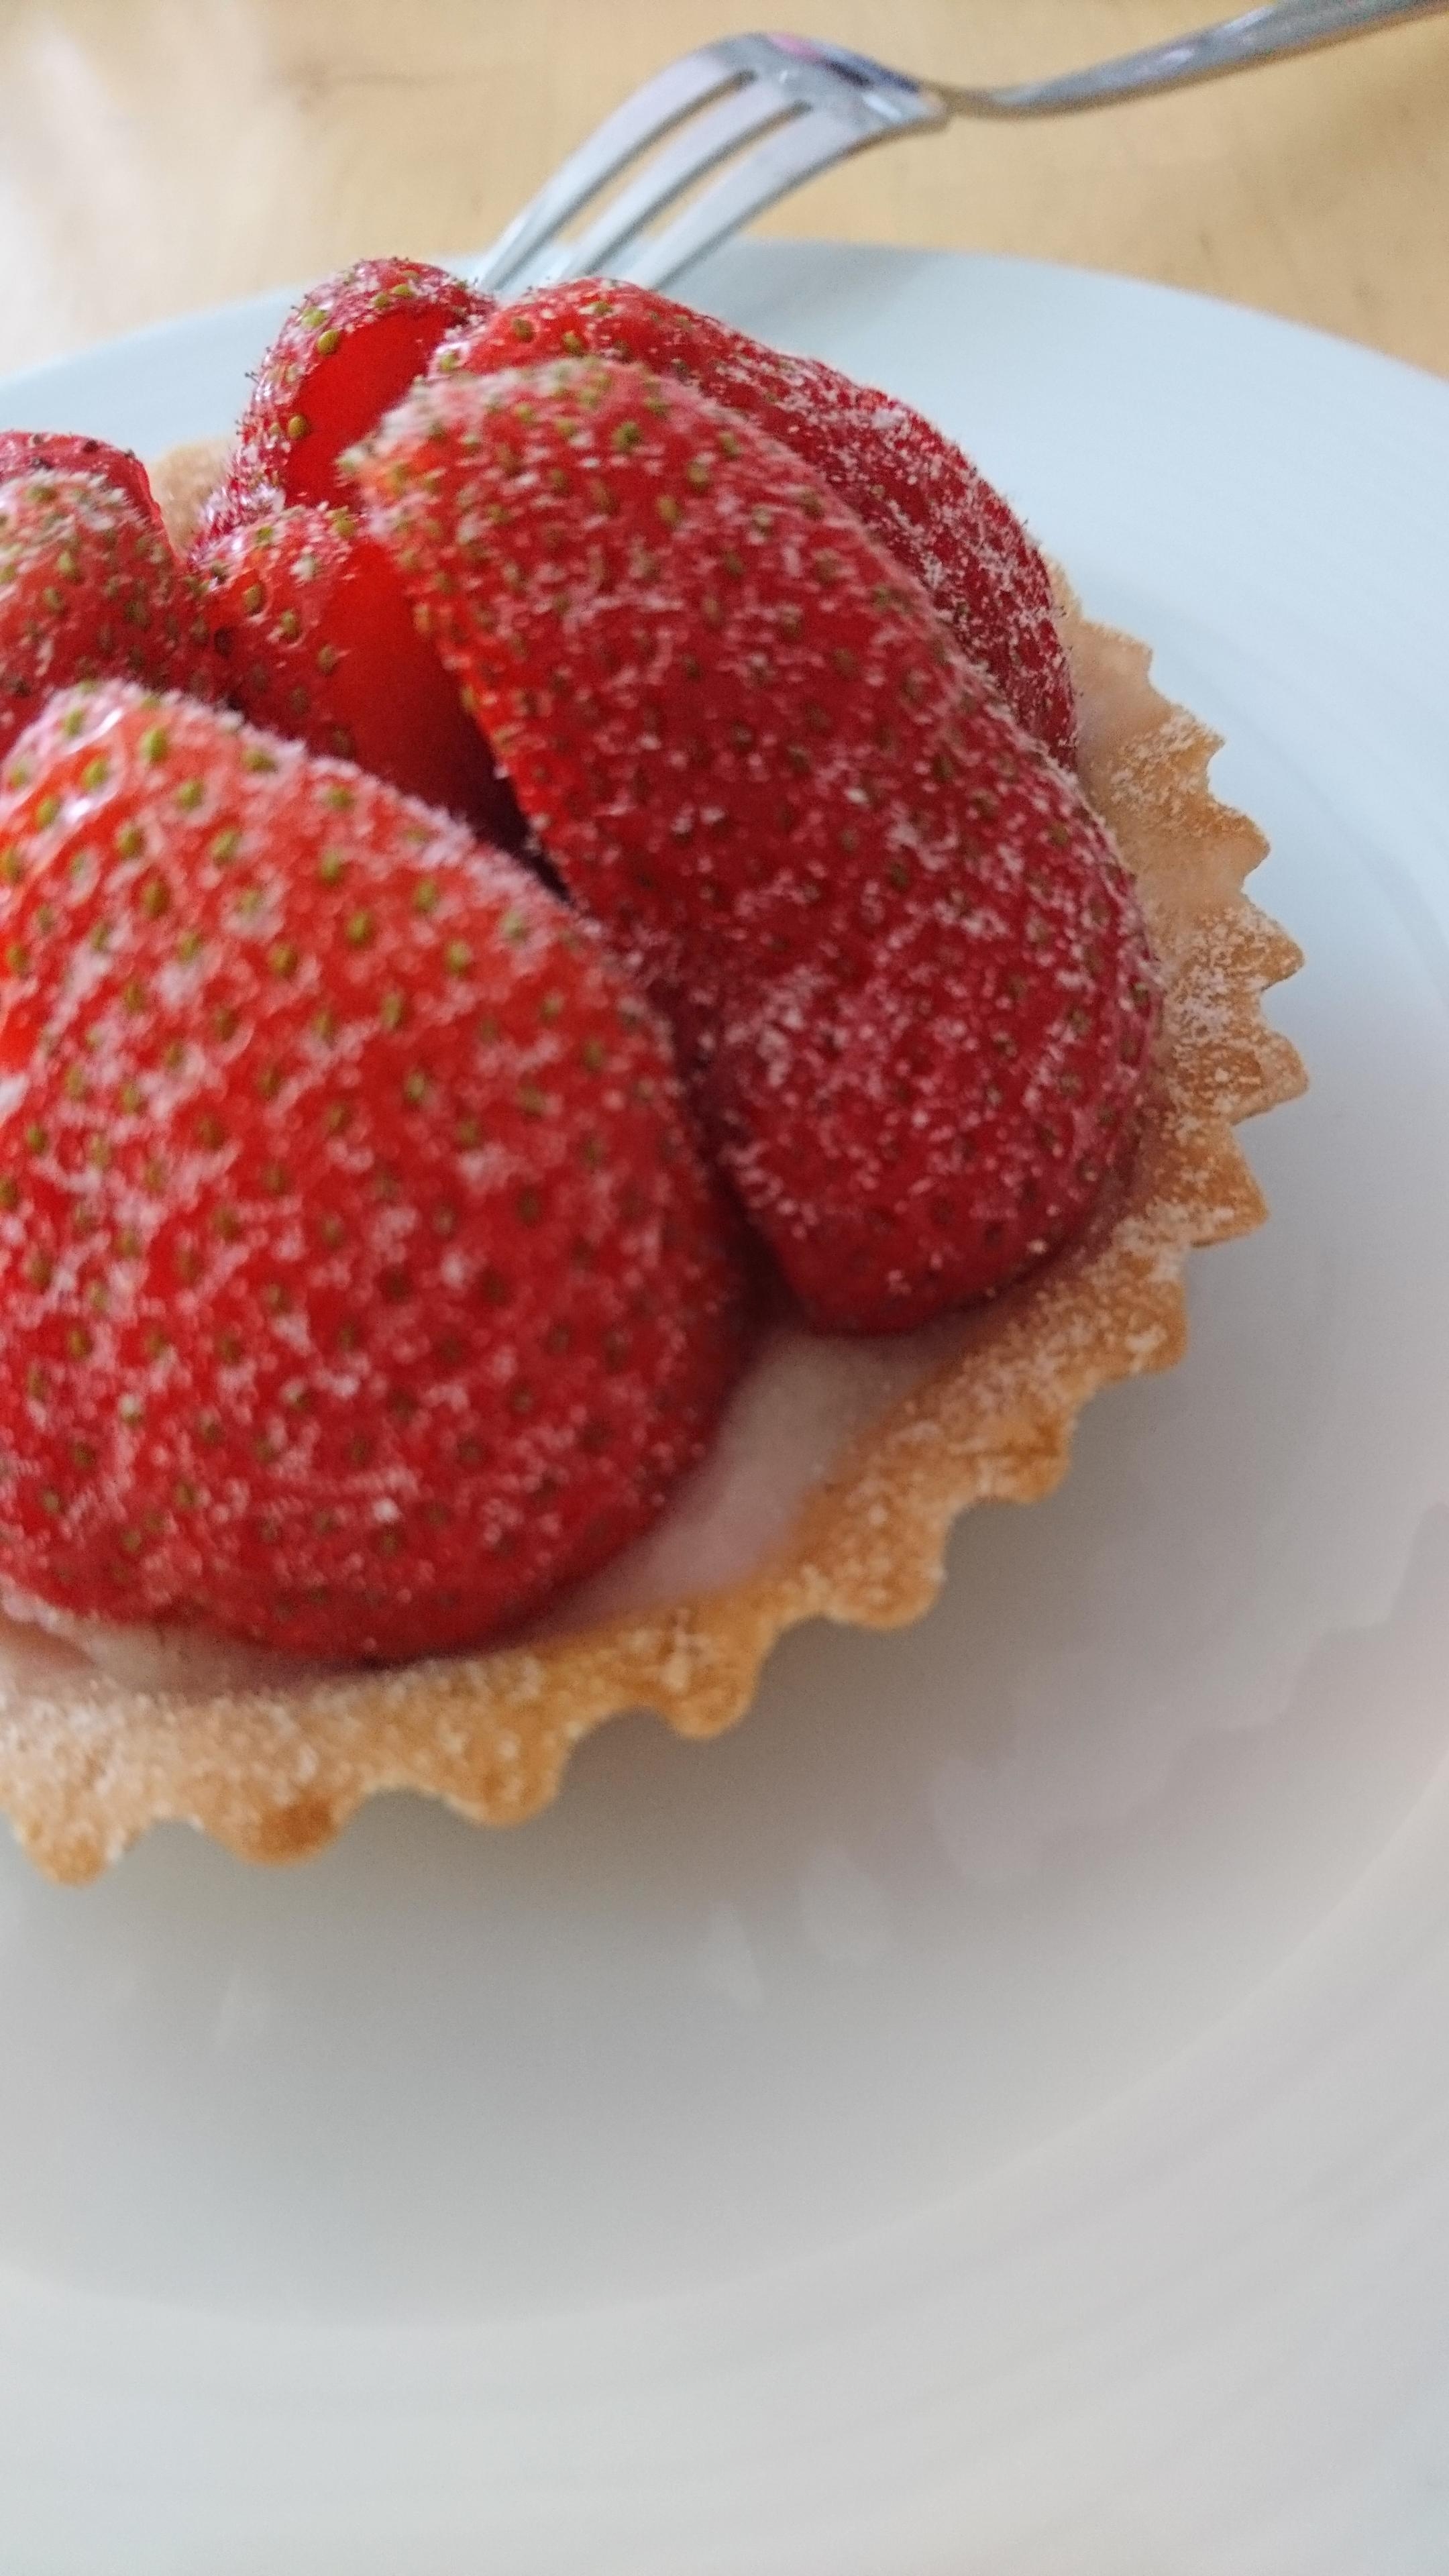 Habt alle ein fantastisches Pfingstwochenende 🍓

#Erdbeertarte #Erdbeeren #Foodlover #weekendlove